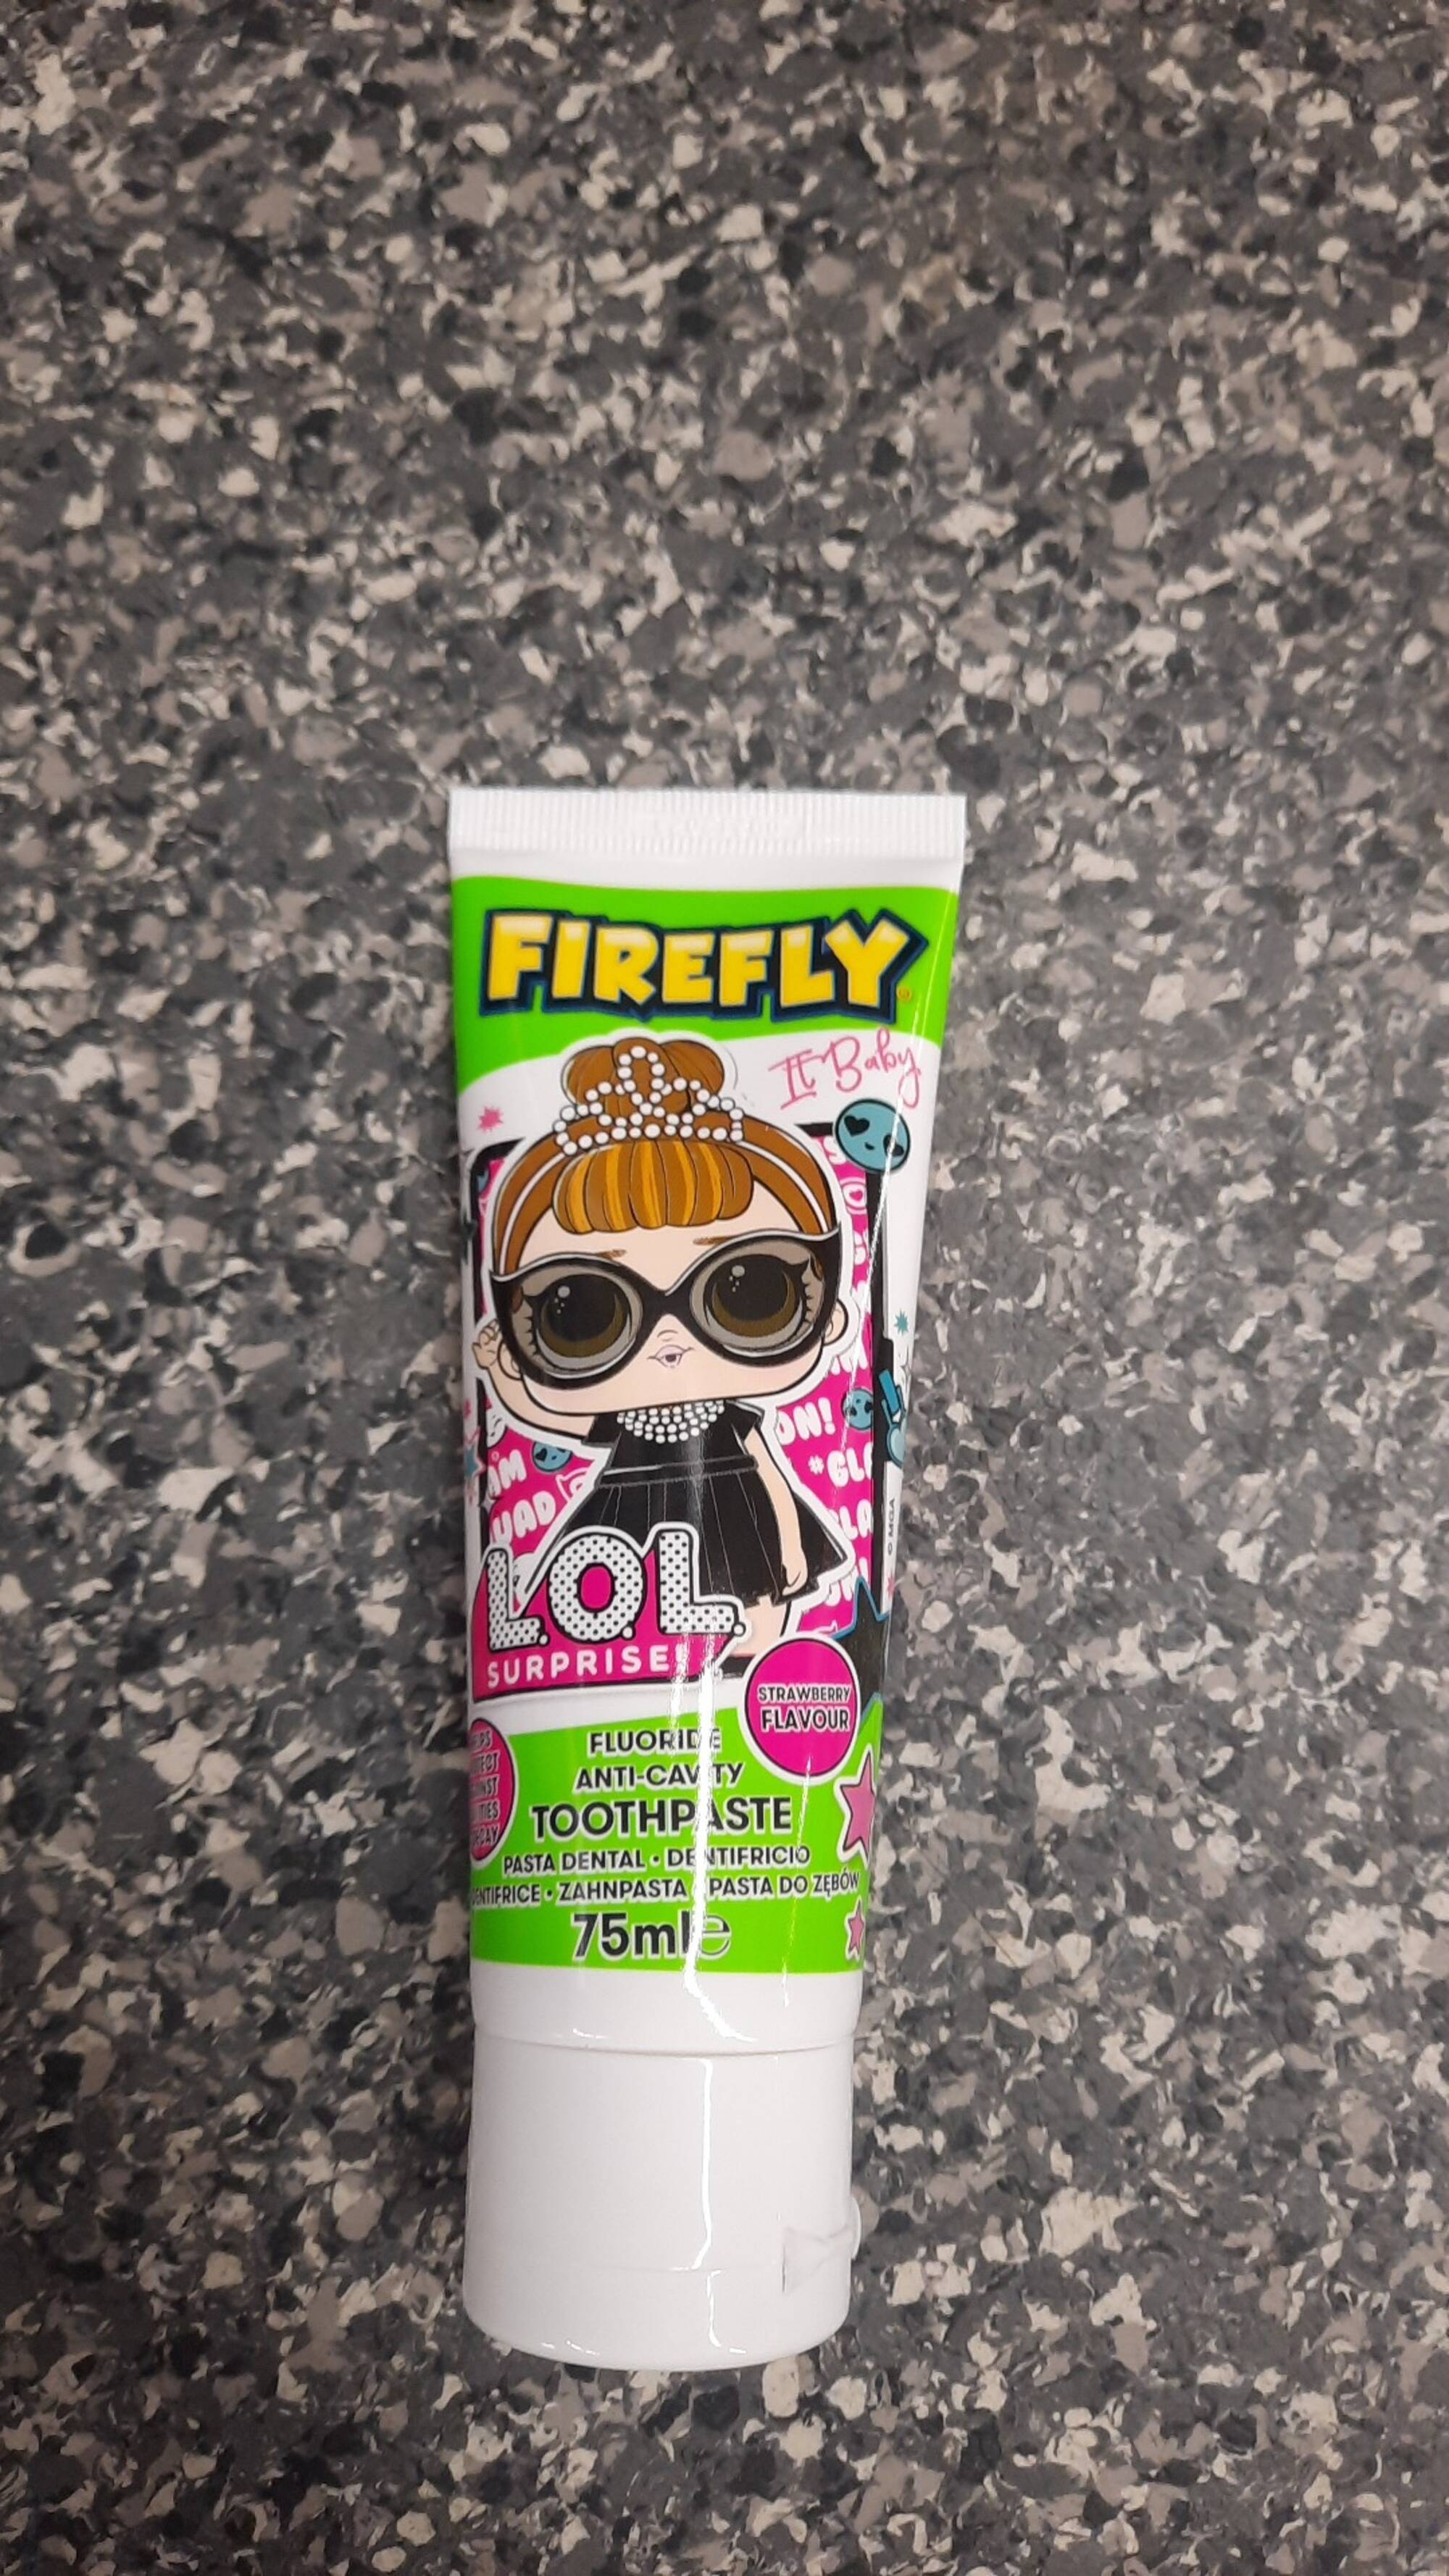 FIREFLY - Lol surprise - Fluoride anti-cavity Baby Toothpaste